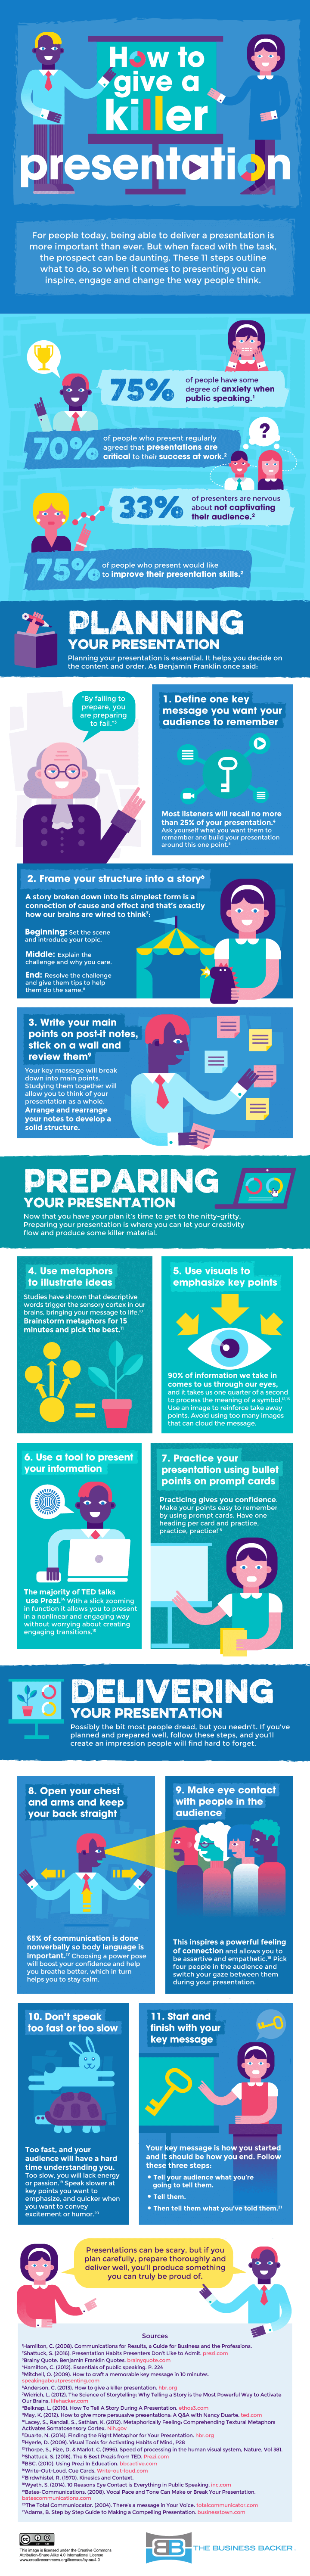 infographic presentations